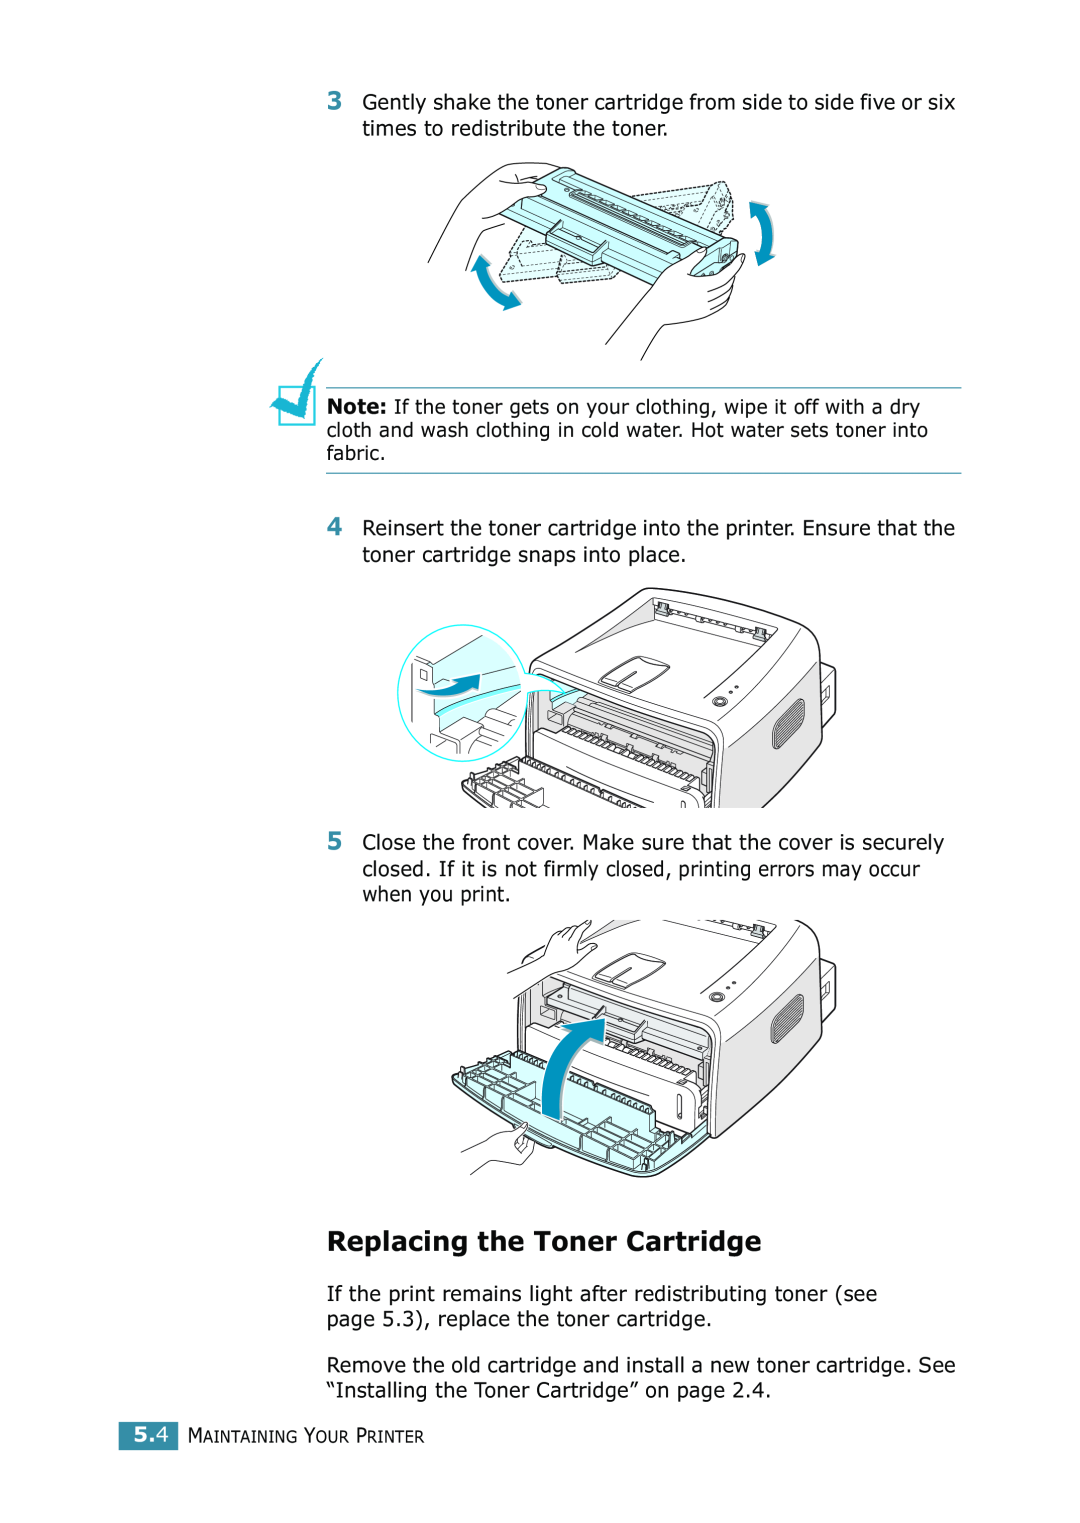 Samsung ML-1520 manual Replacing the Toner Cartridge, Maintaining Your Printer 